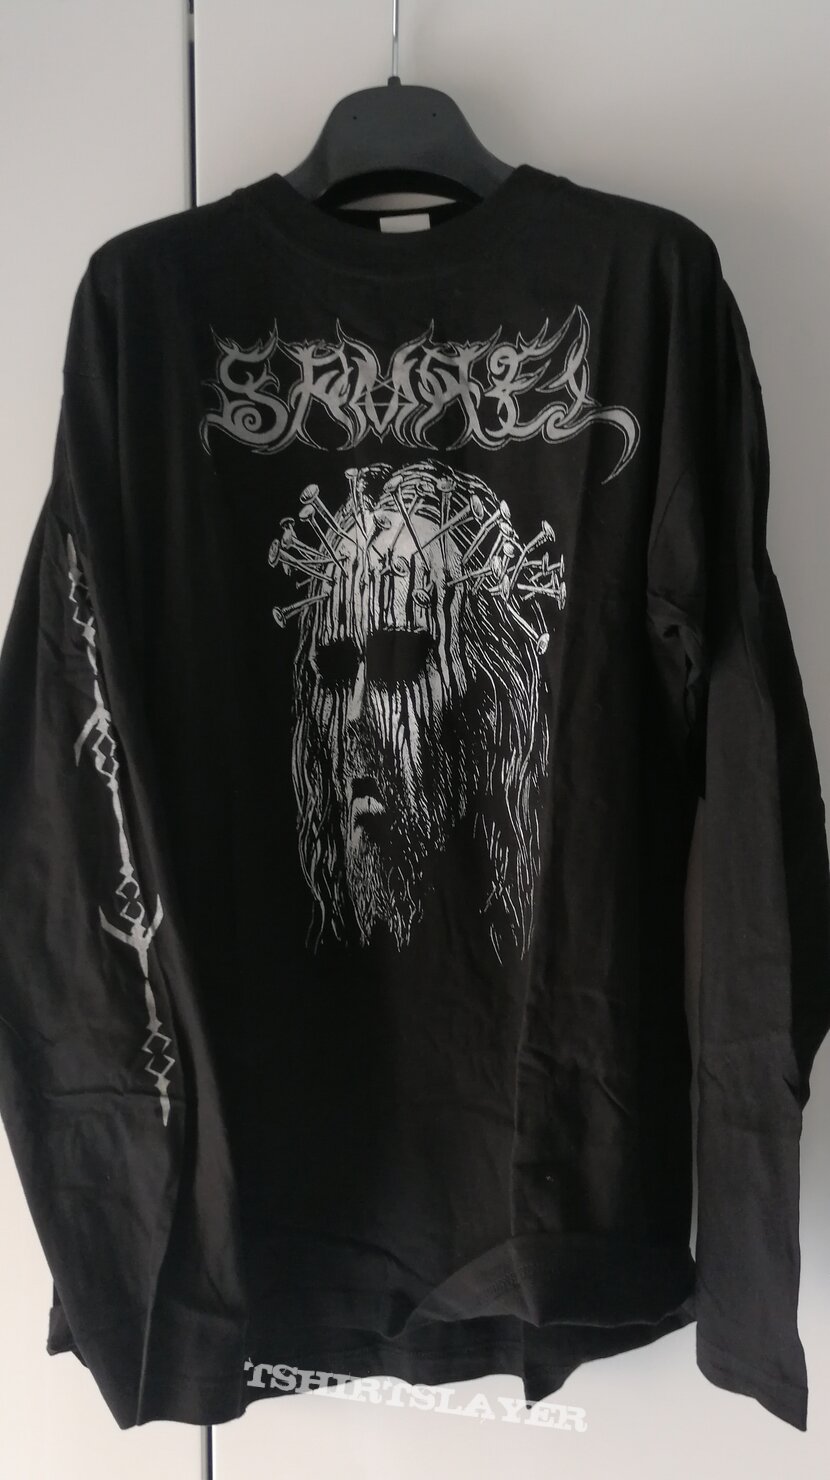 Samael Black metal